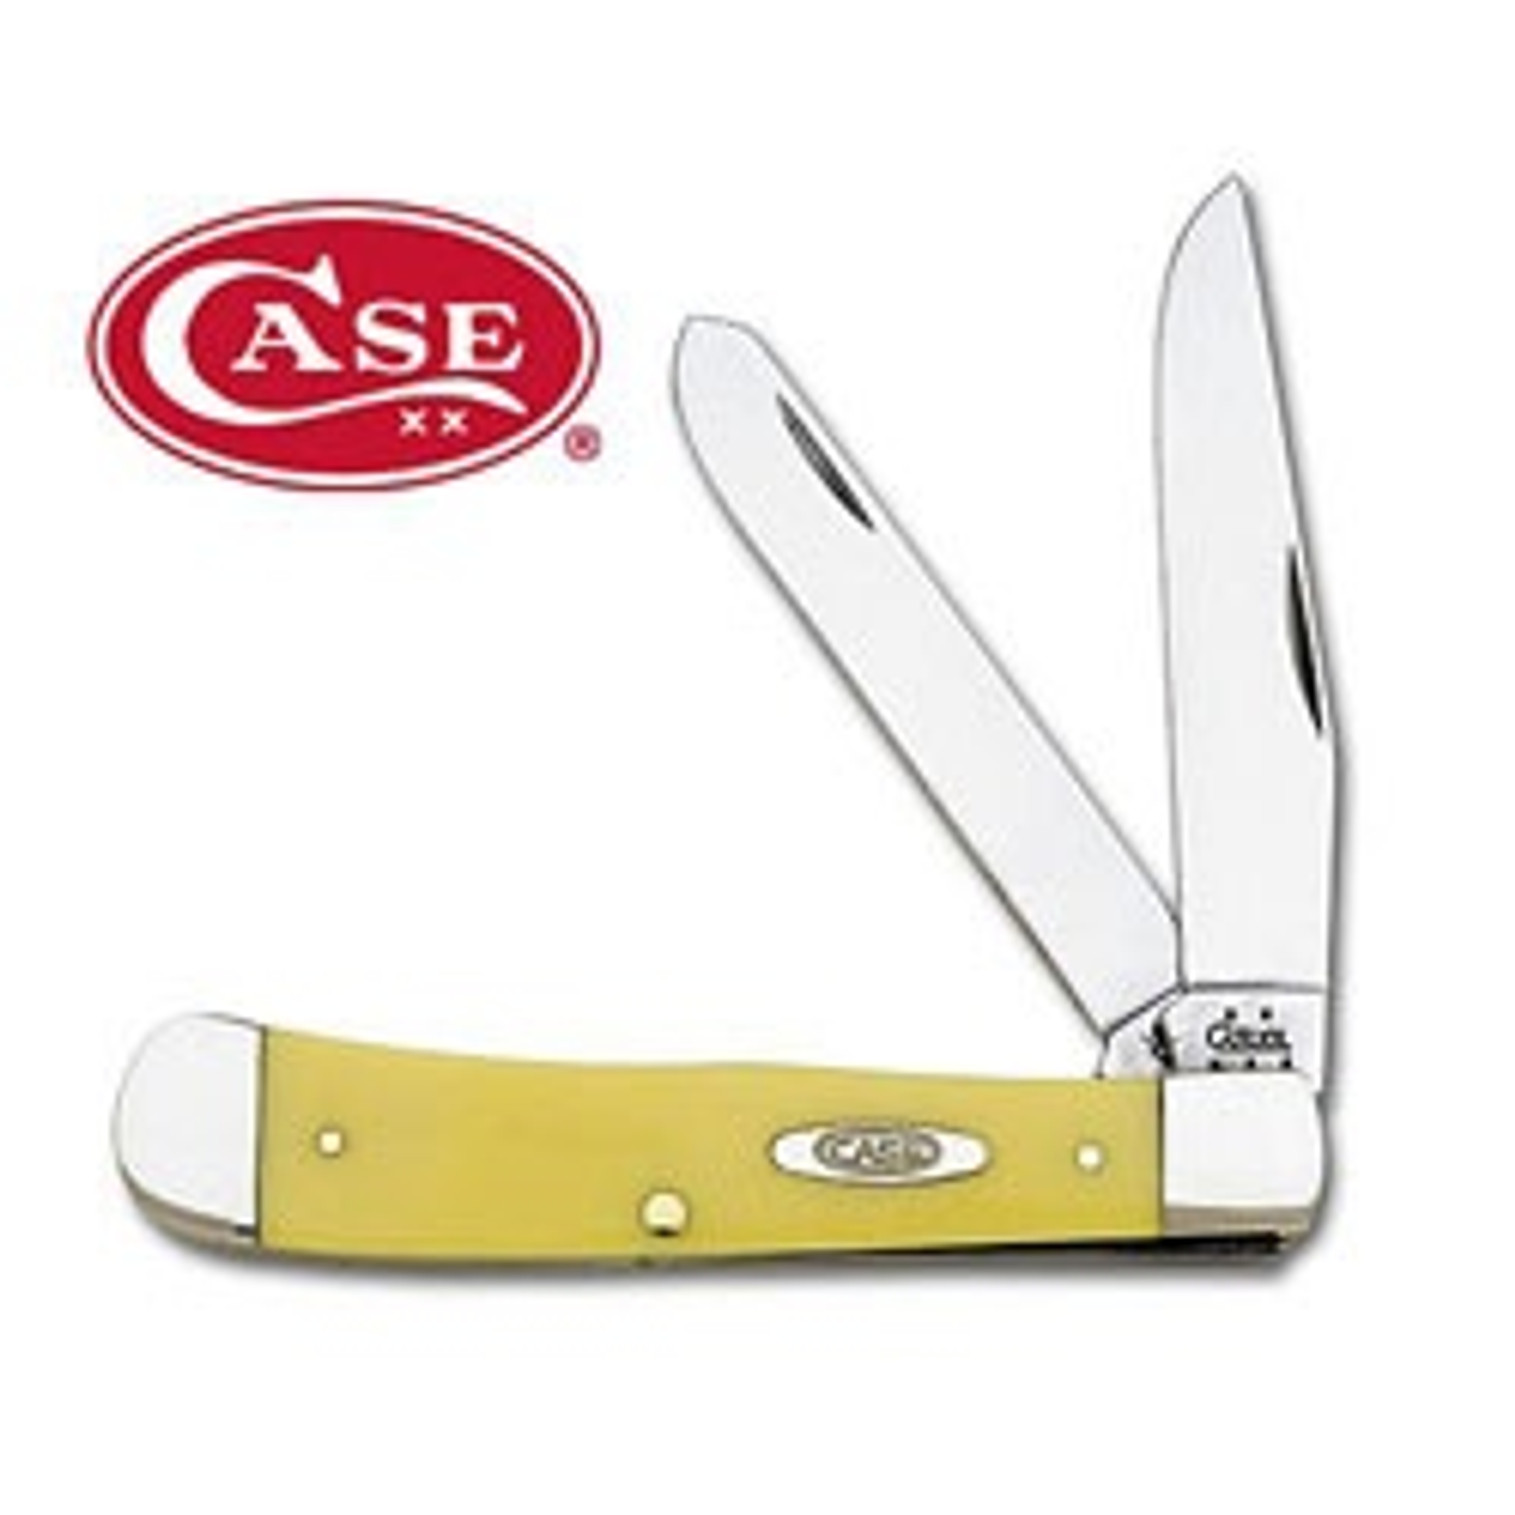 Case Trapper Folding Knife - Yellow